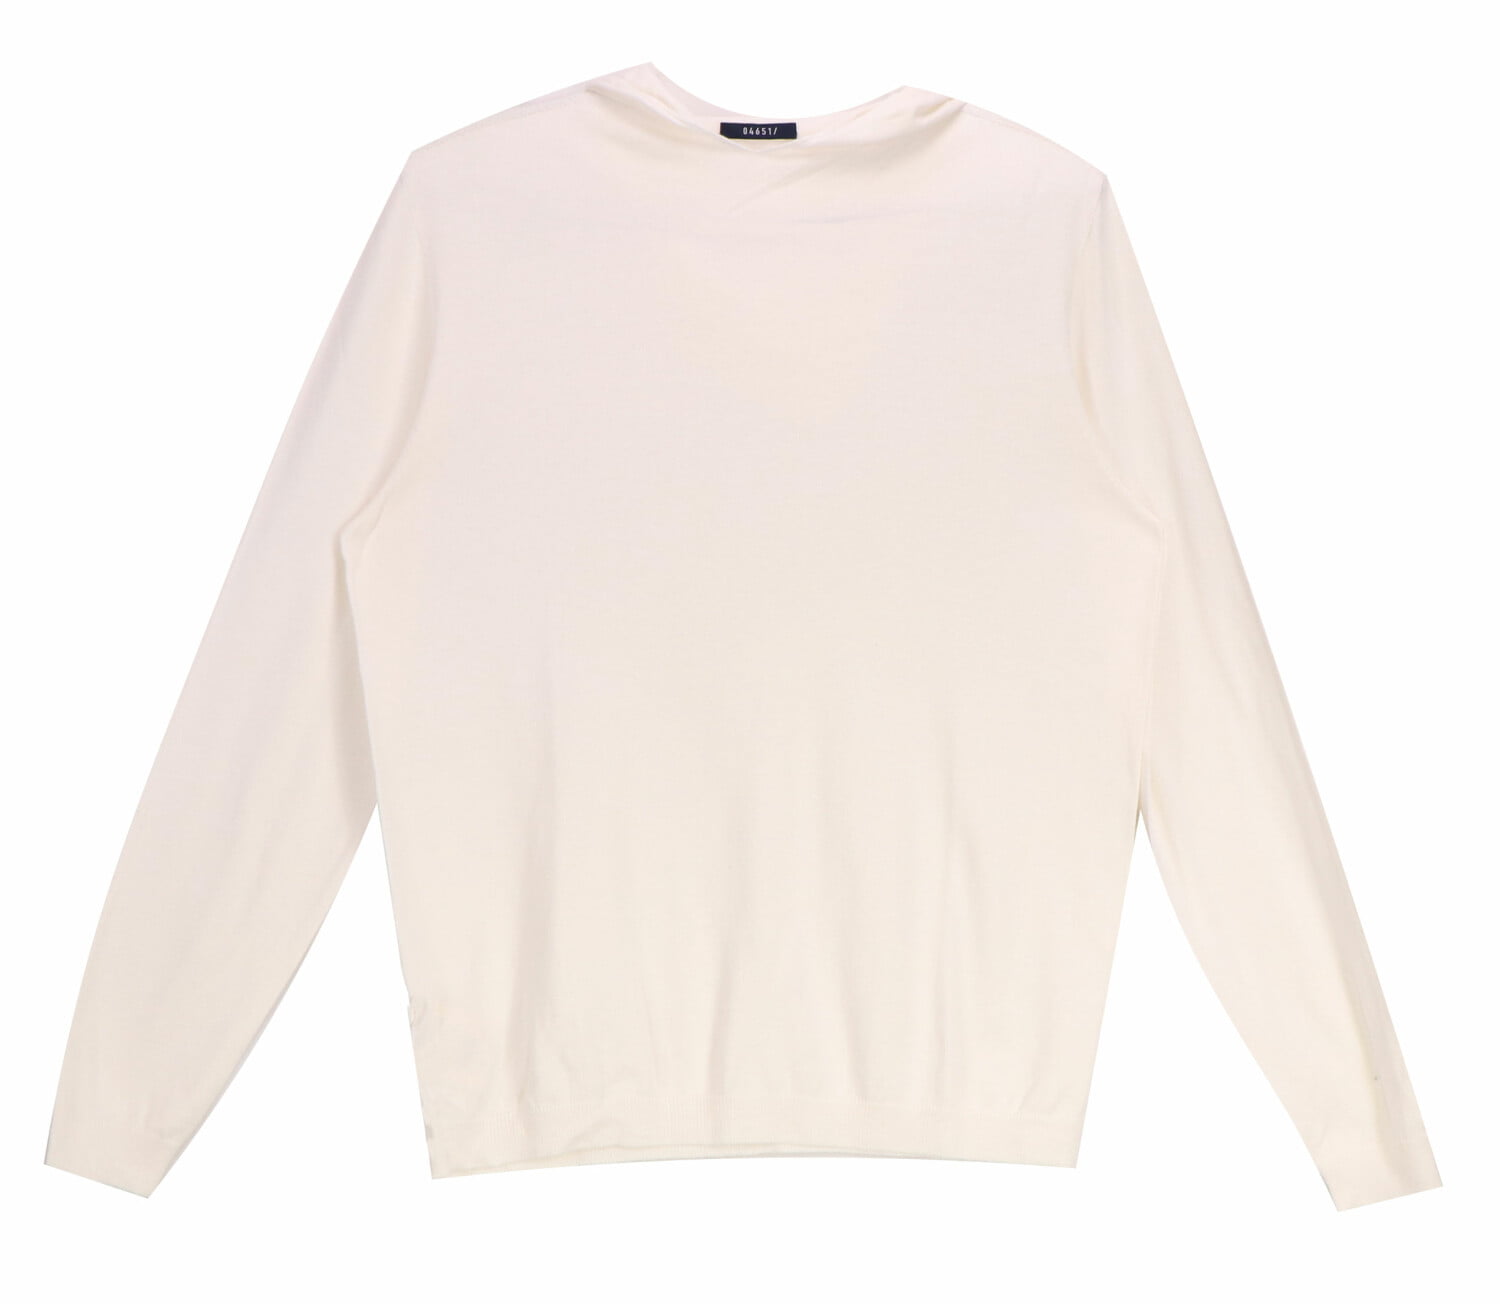 04651/ Men's White Cotton Hooded Sweater Pullover - L | Walmart Canada